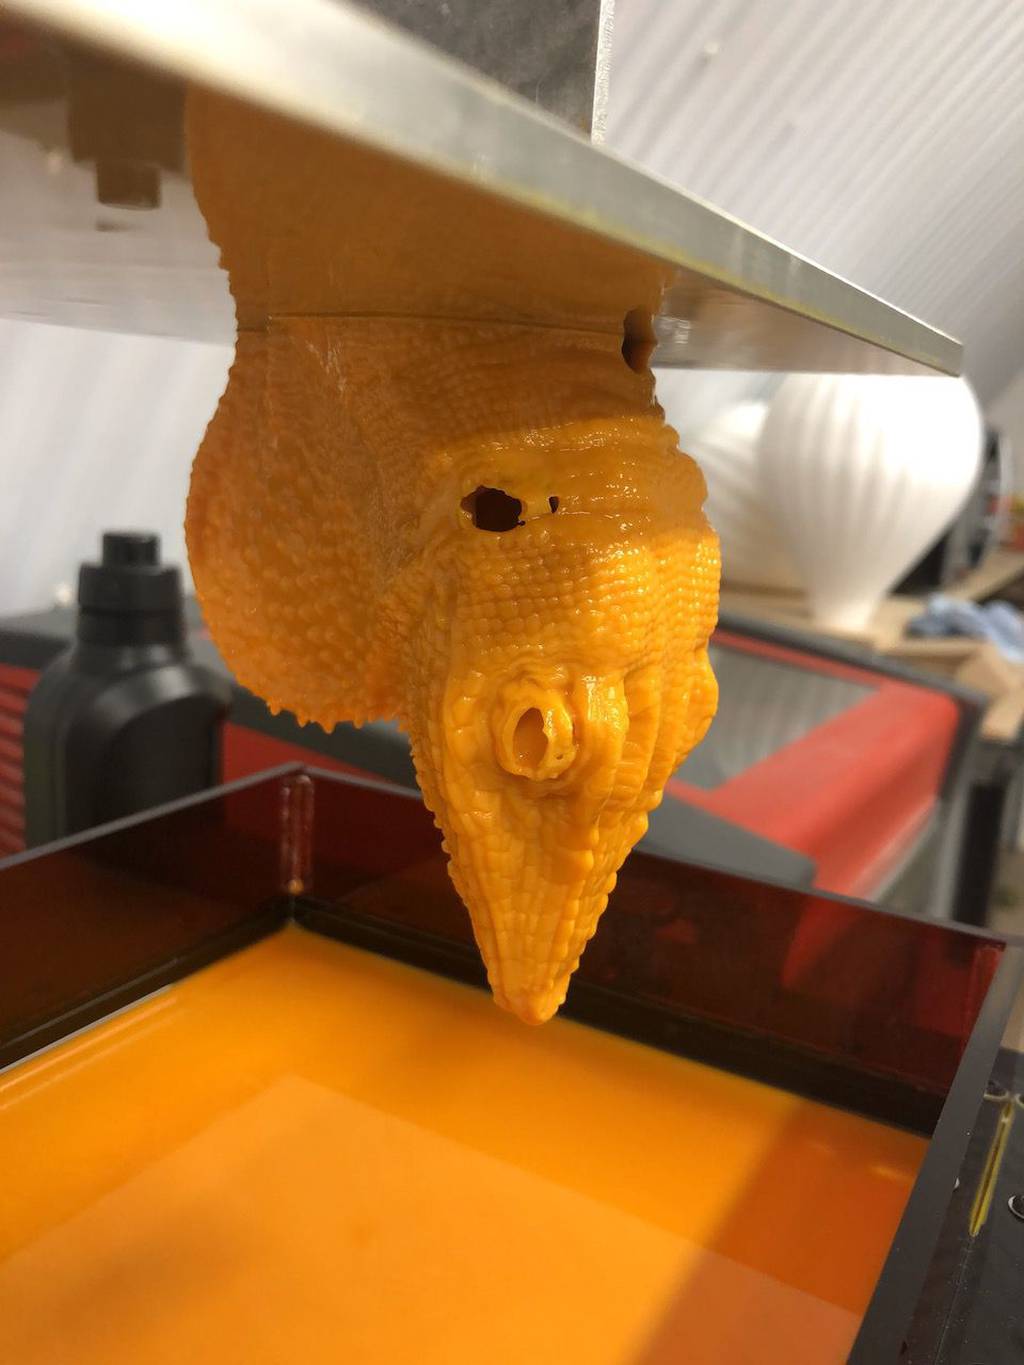 3D Printing
